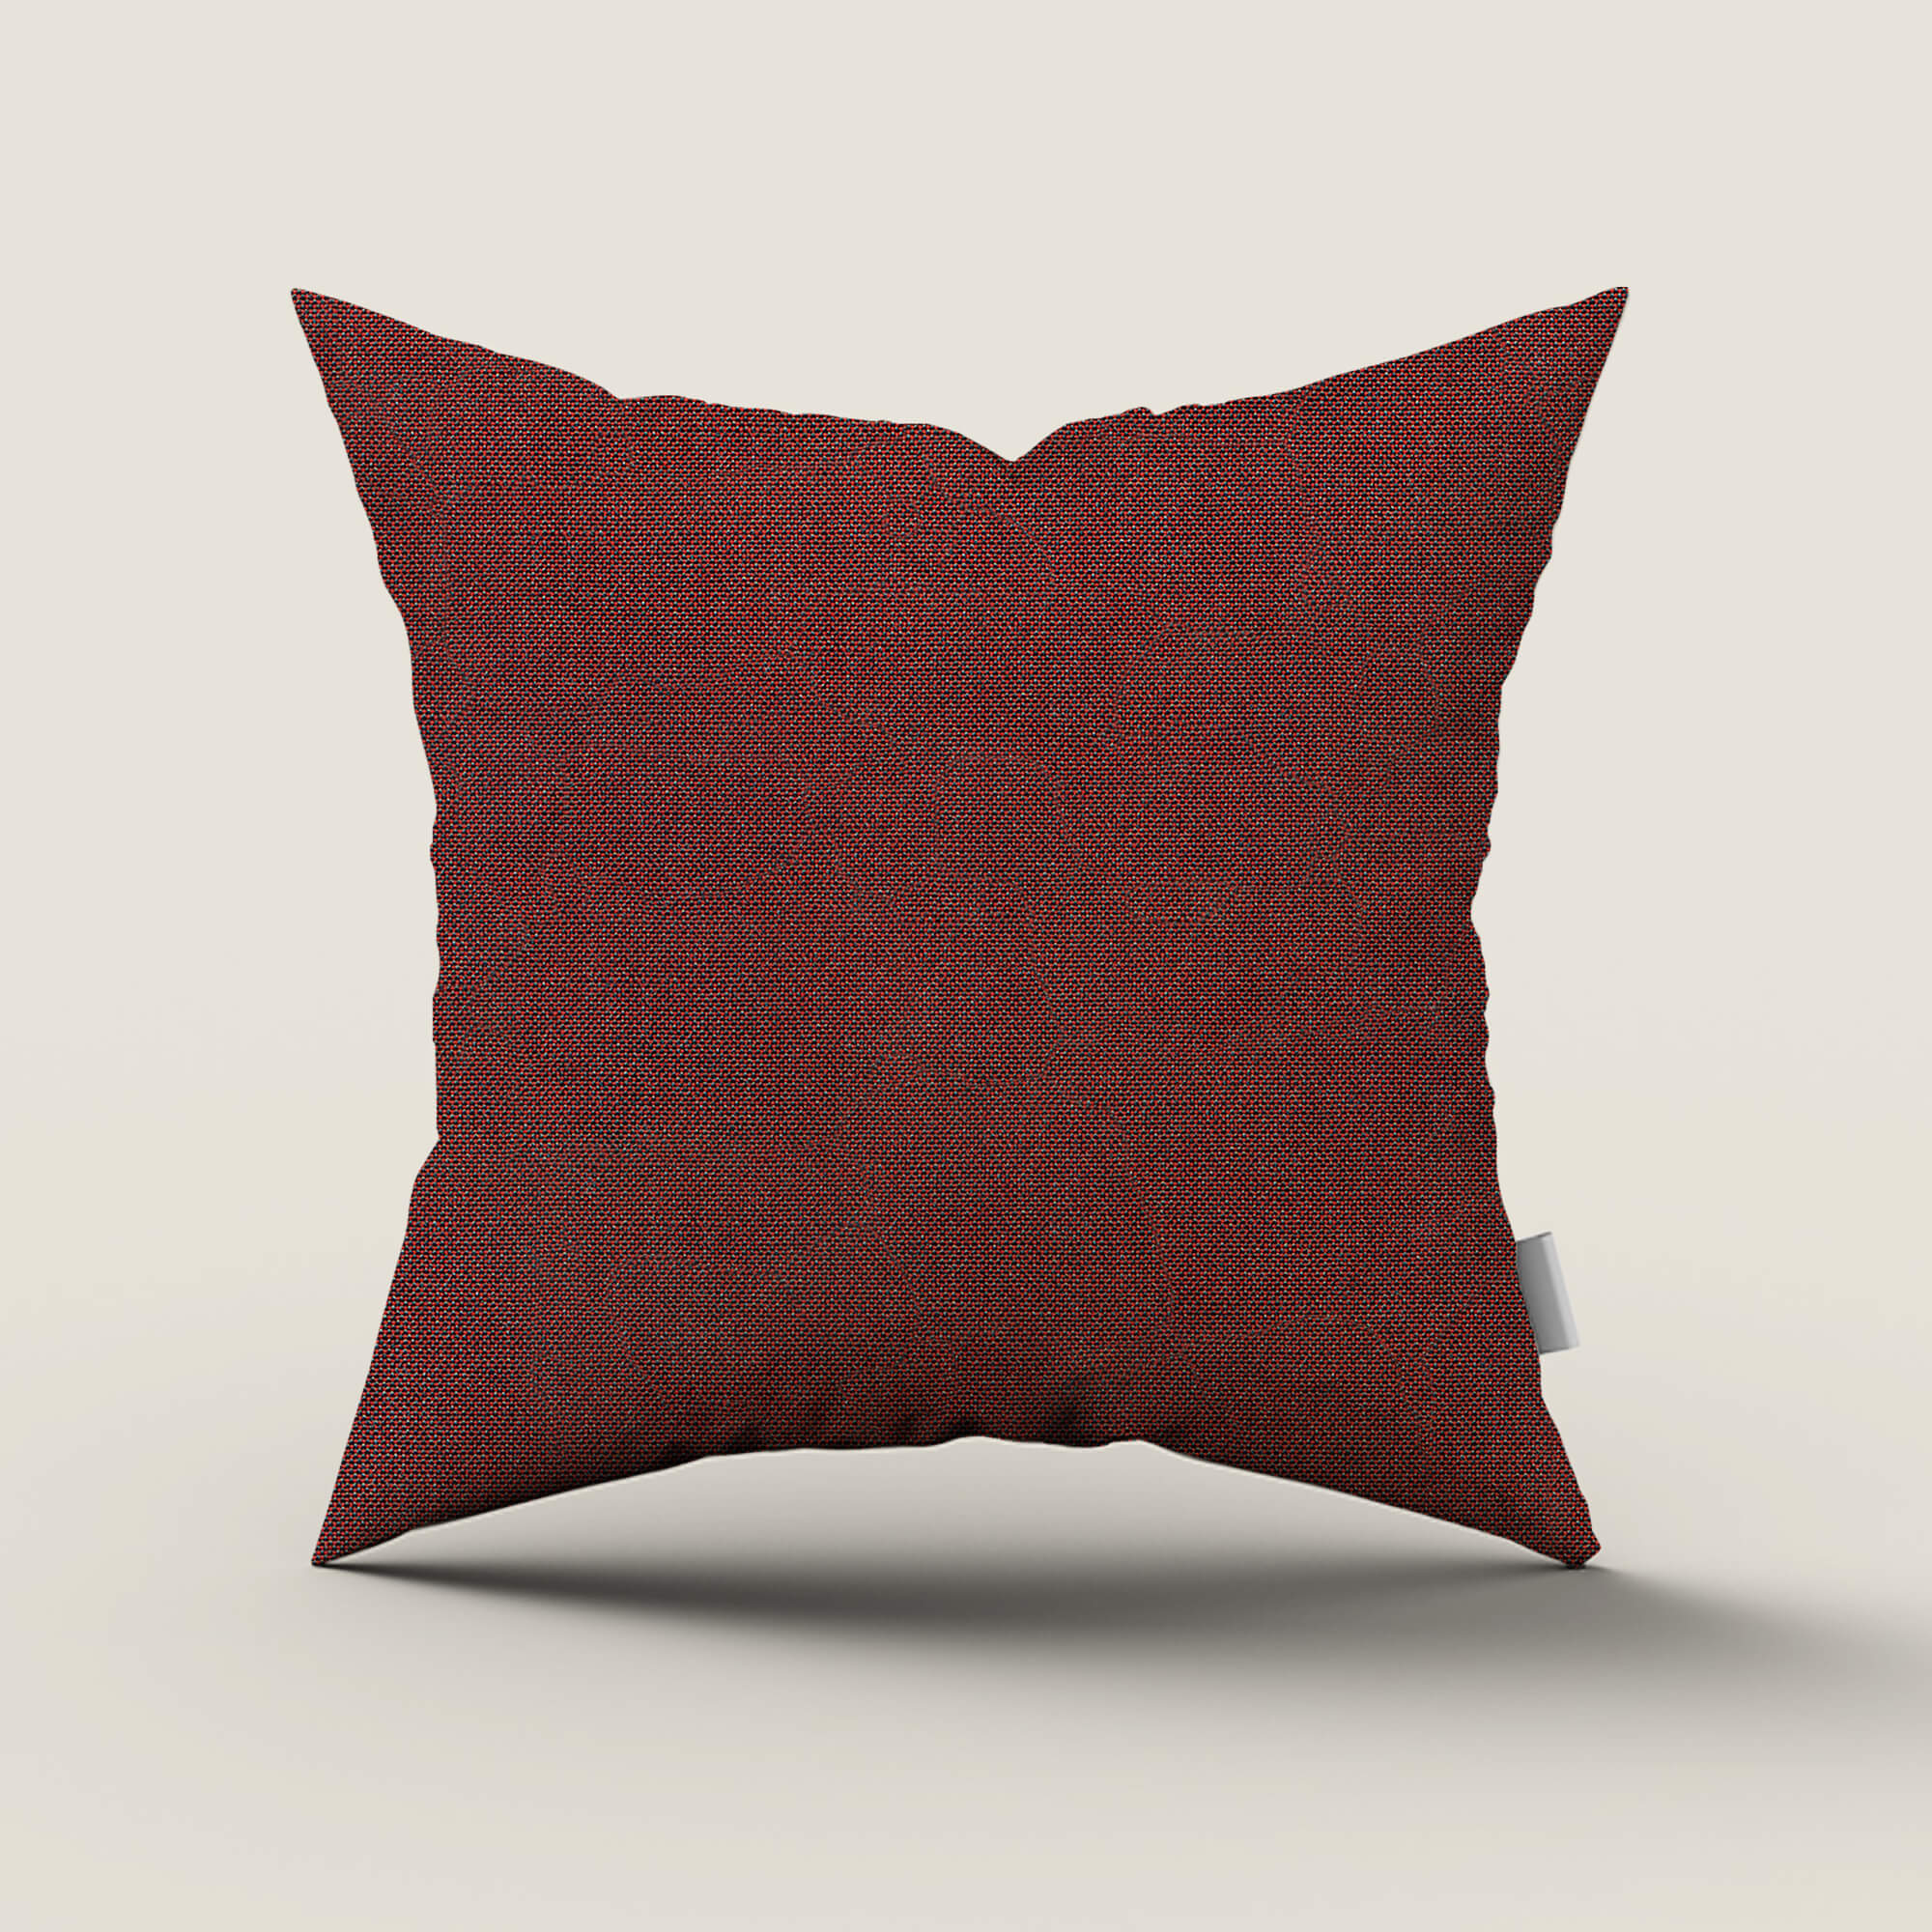 PENGI Waterproof Outdoor Pillow Case 1 Pcs - Blend Oxblood Red